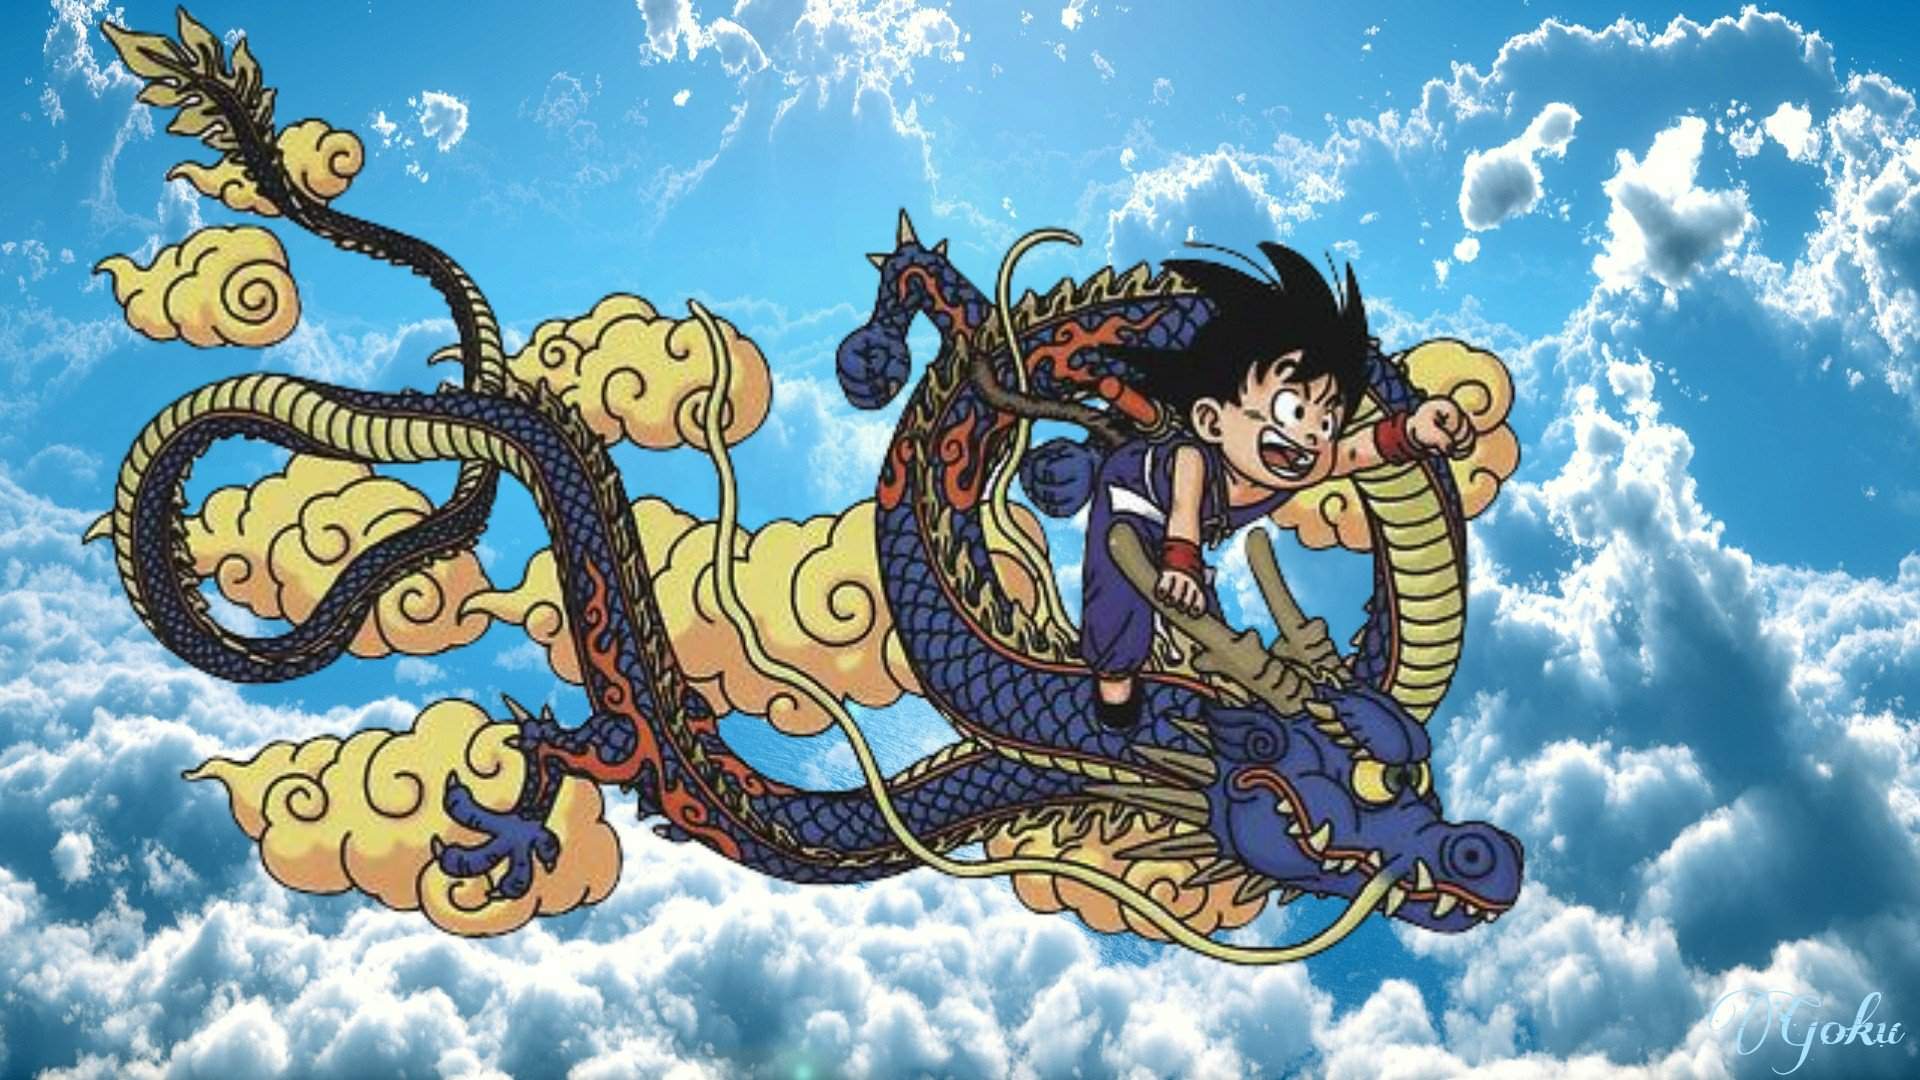 Goku And Shenron Wallpapers Top Free Goku And Shenron Backgrounds